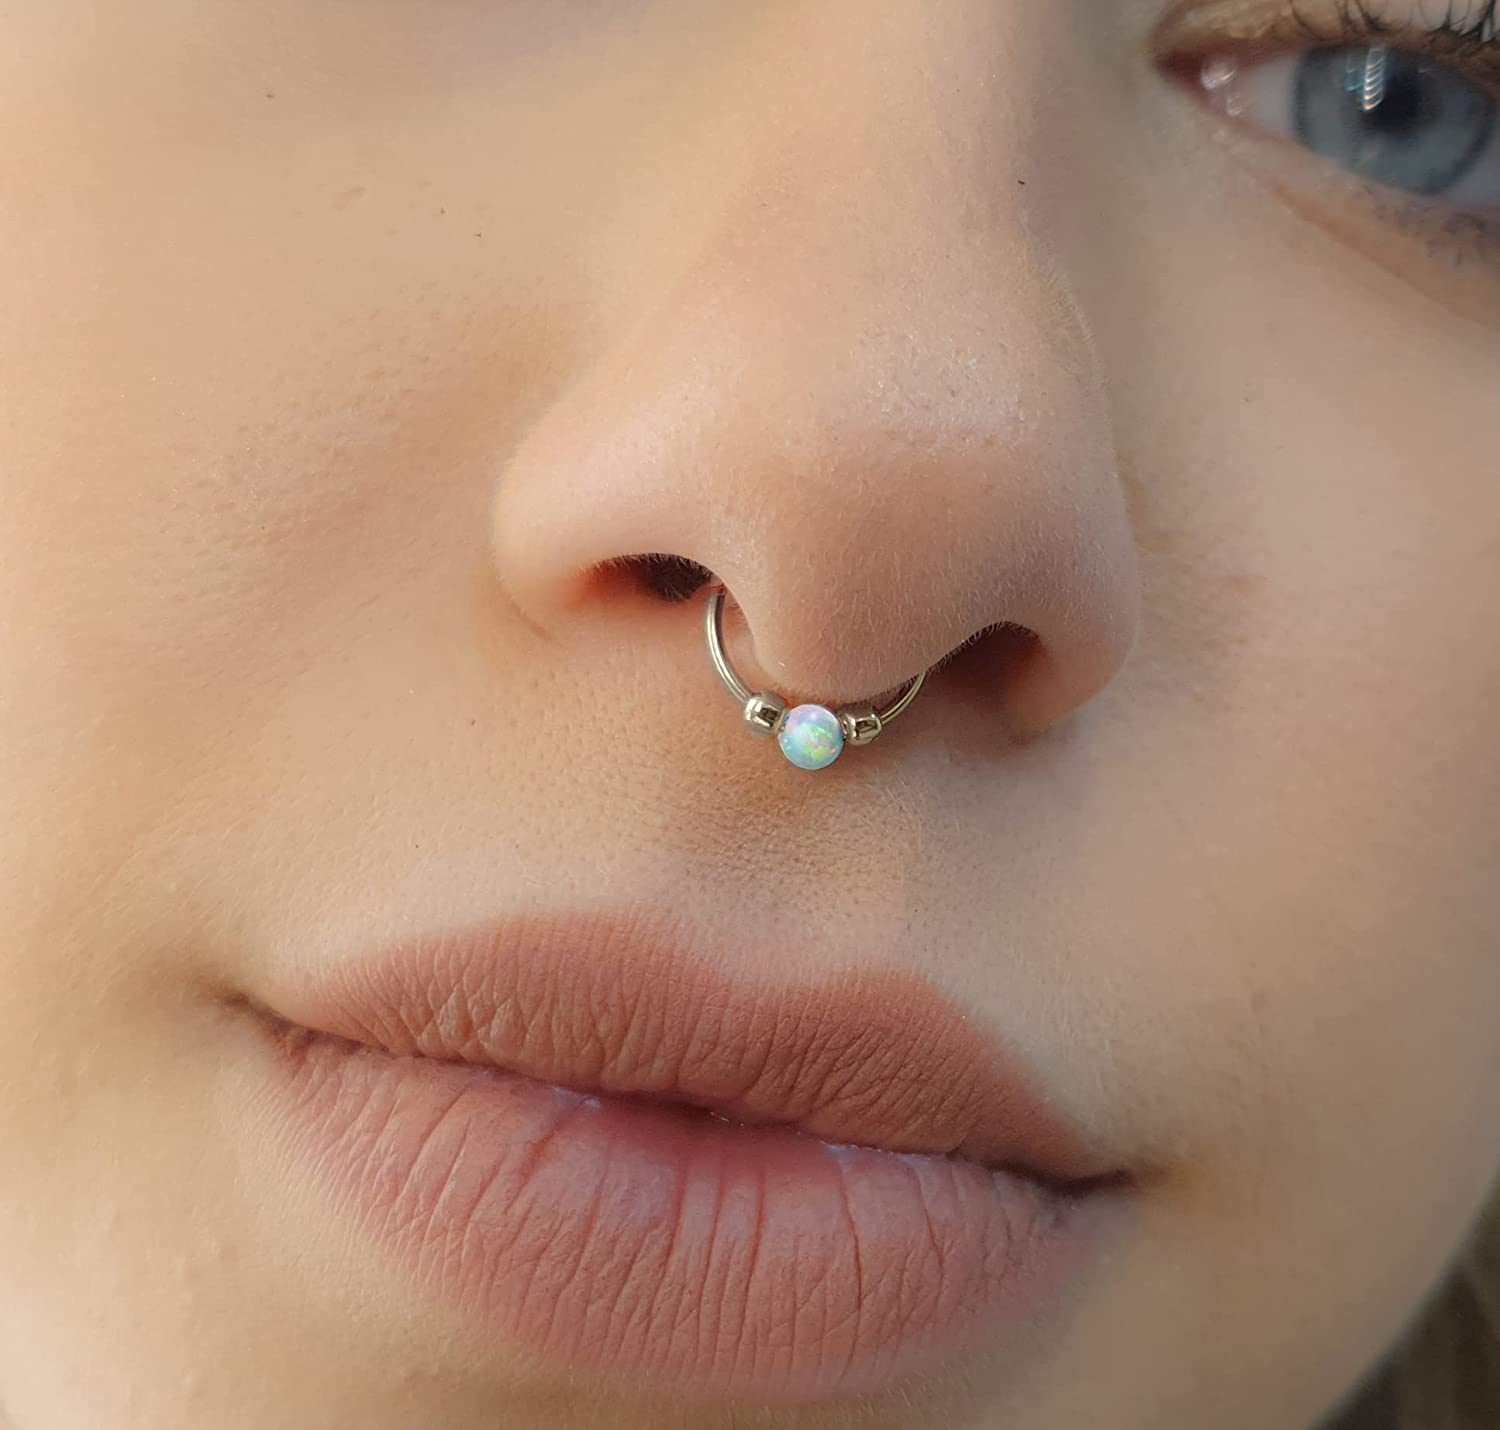 Peekaboo Fake Septum Ring, SMALL HOOP, 20 Gauge, Silver, Rose Gold, Gold  fake Nose Ring Tiny, Cute, Simple, Septum Cuff, Minimalist - Etsy | Septum  piercing jewelry, Fake ear piercings, Septum rings small